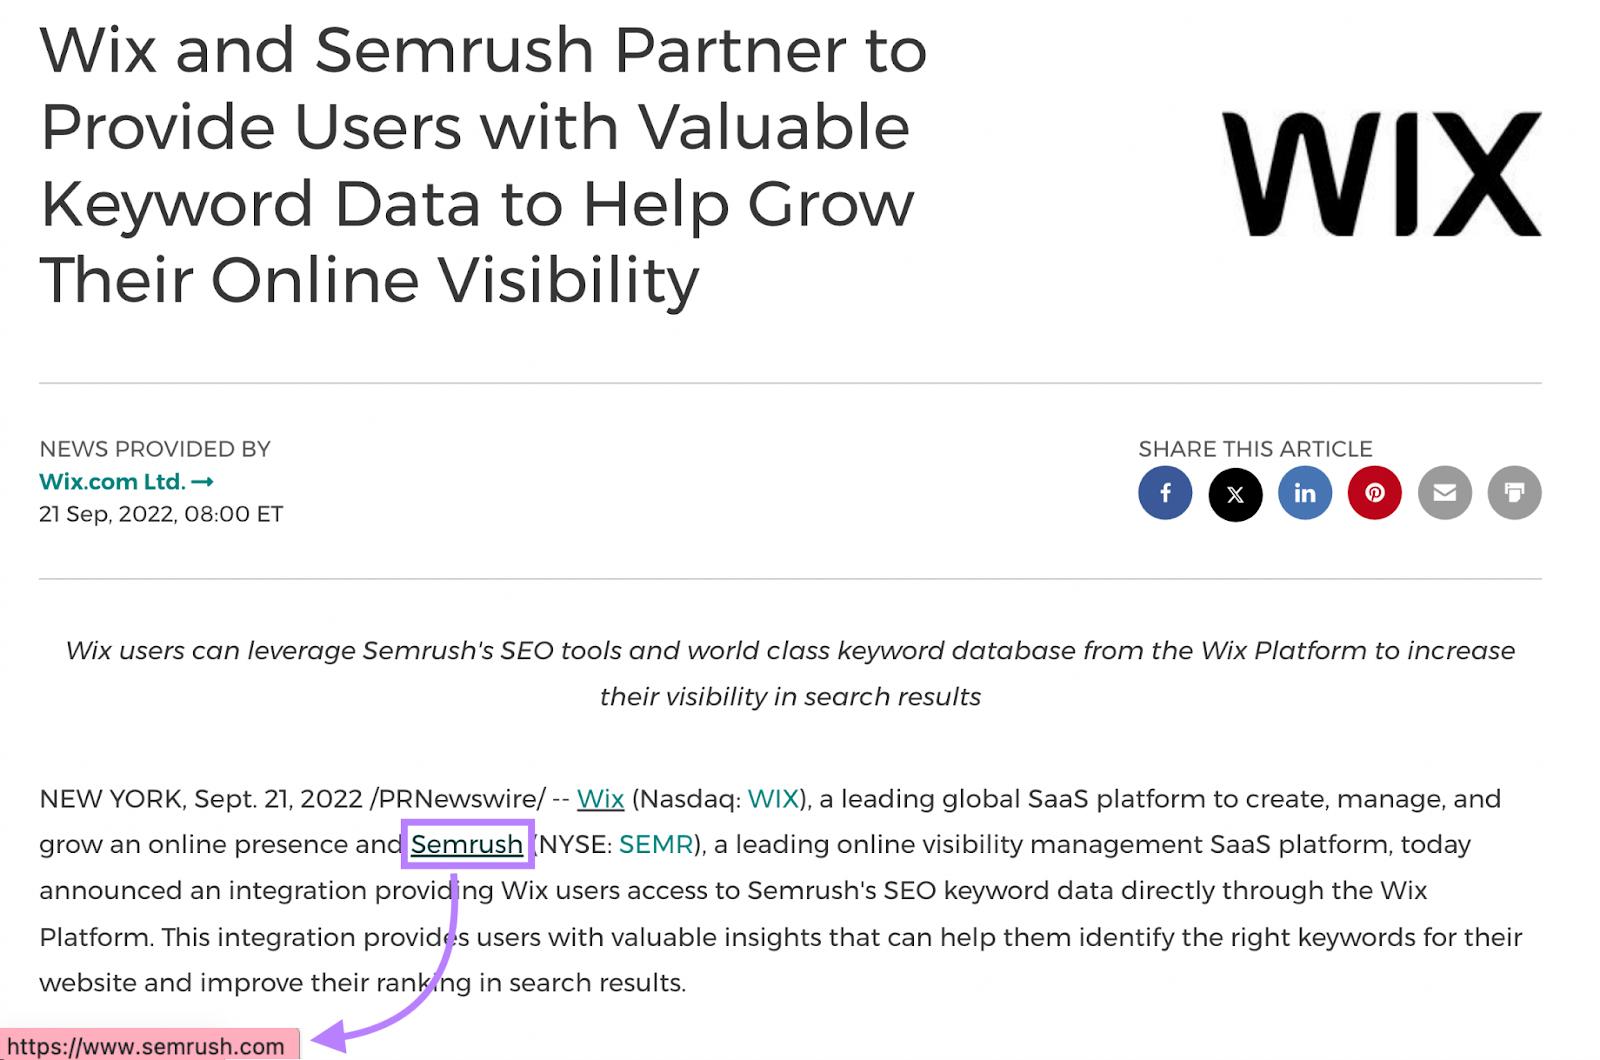 Un exemple de backlink de marque vers le site Web Semrush